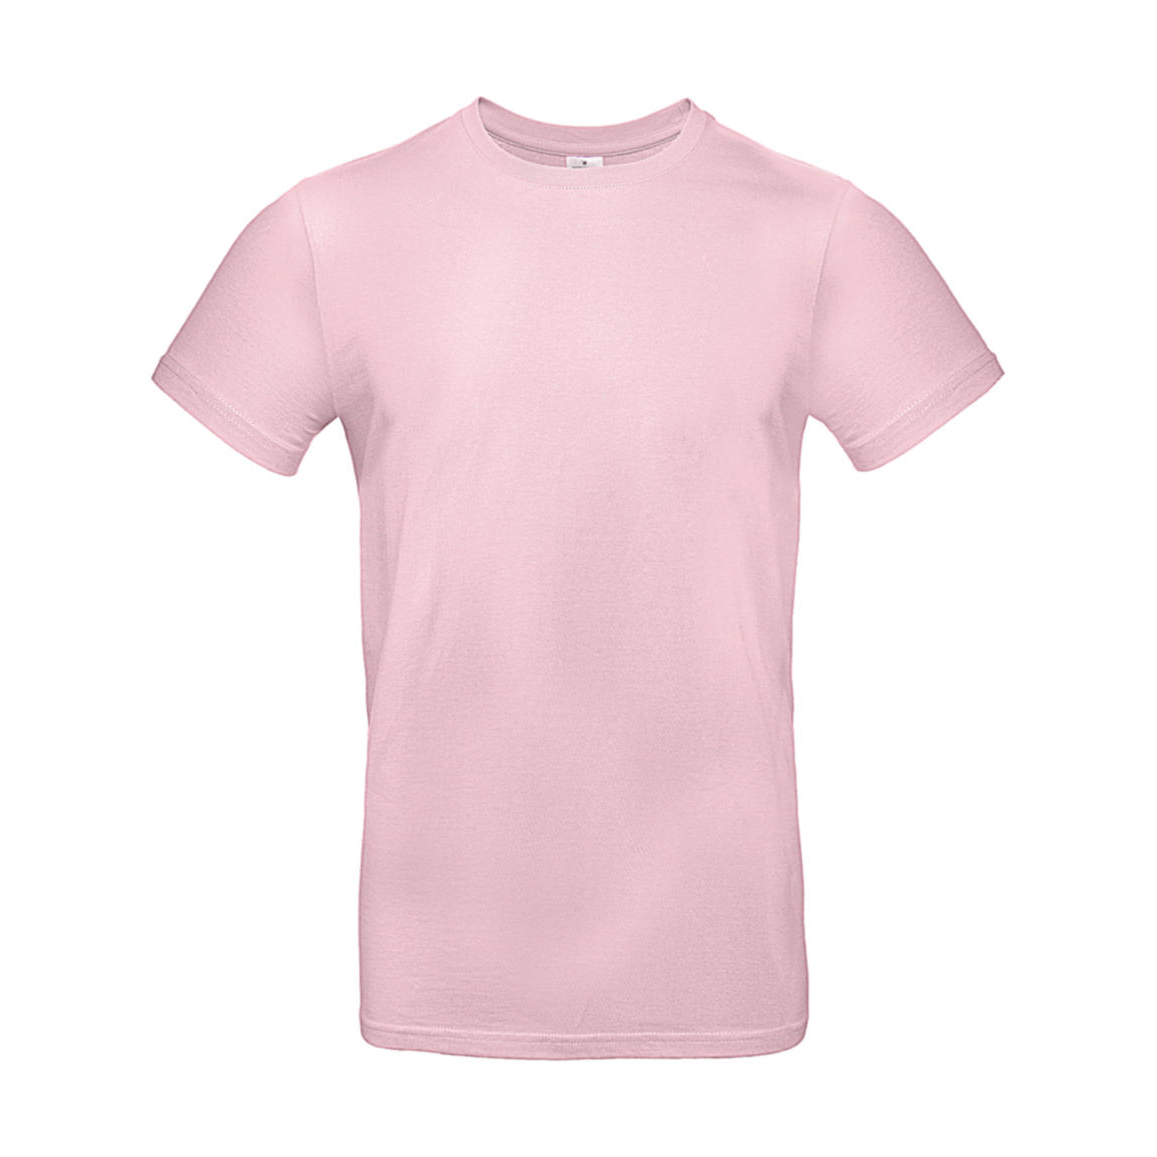 Triko pánské B&C E190 T-Shirt - světle růžové, 3XL